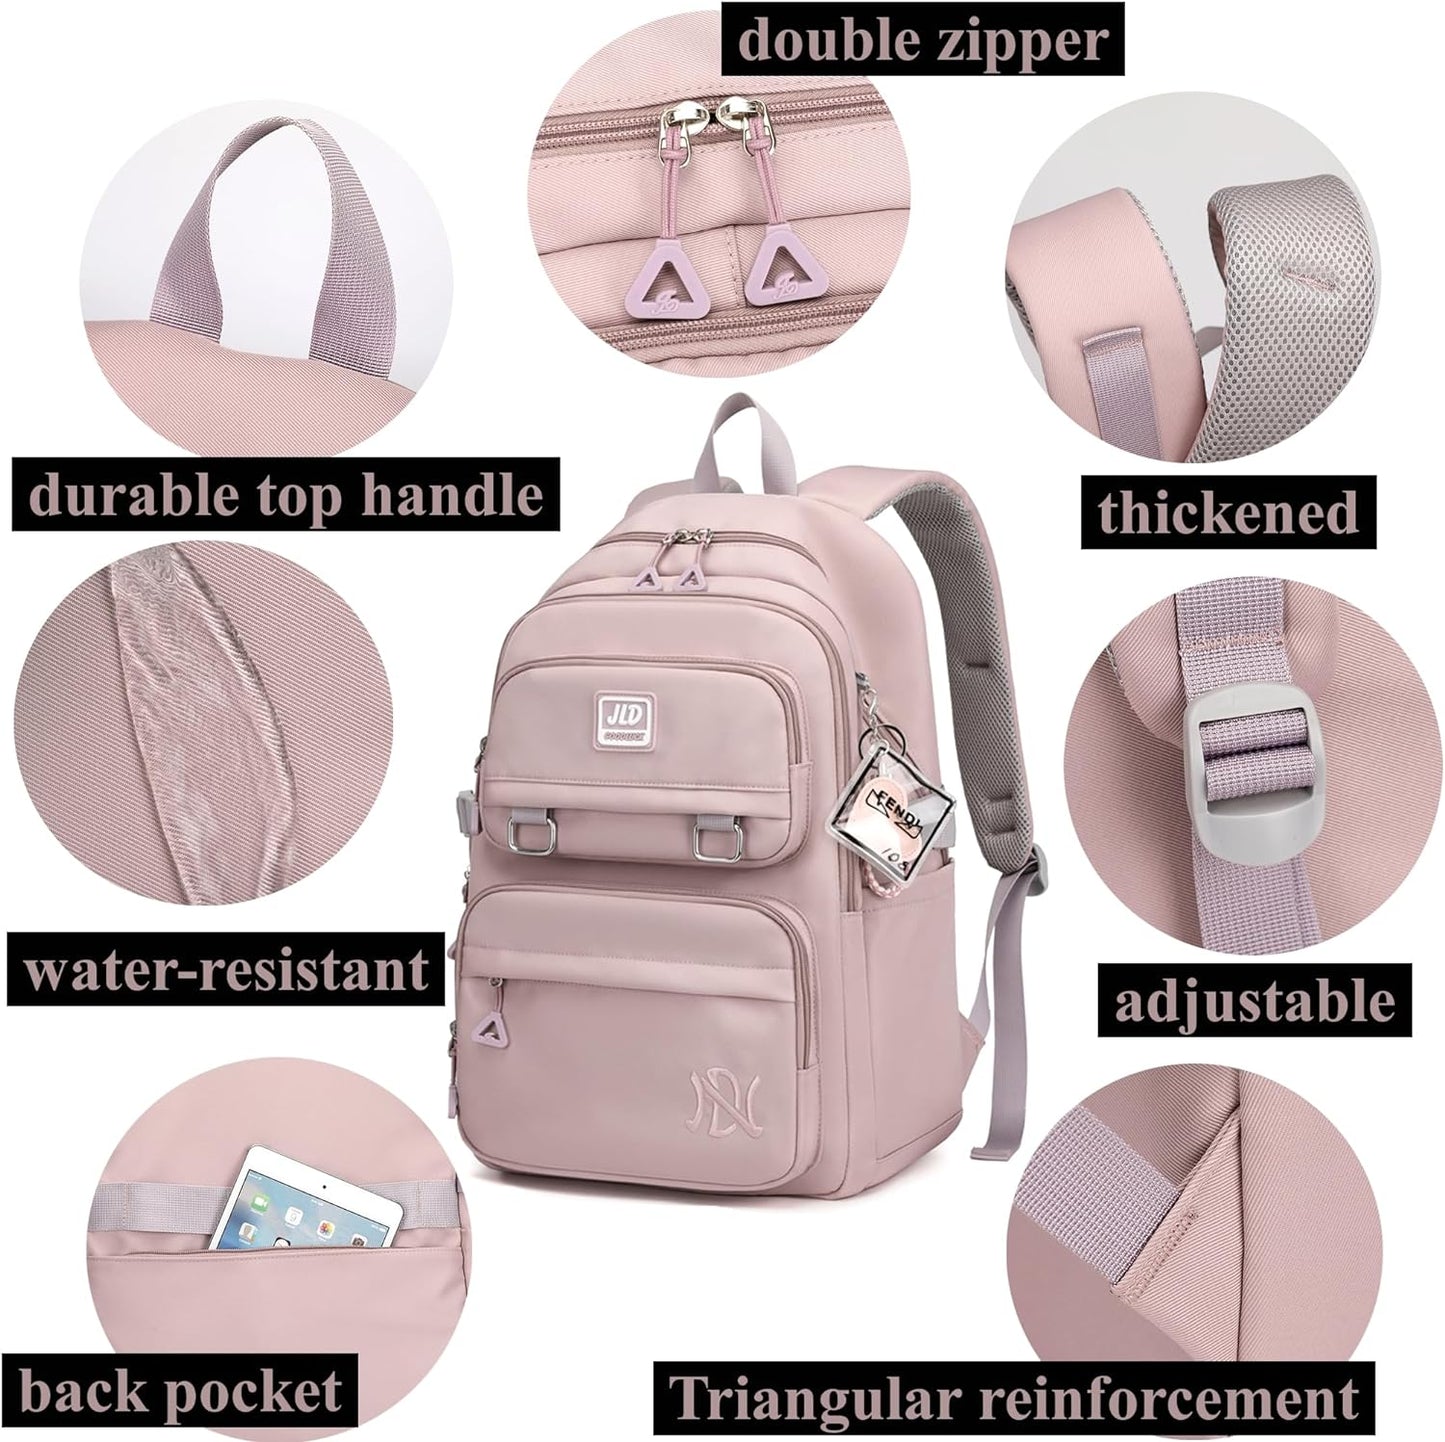 Leaper Water-resistant Laptop Backpacks Lightweight Shoulder Bag for Men Women Casual Daypack Black